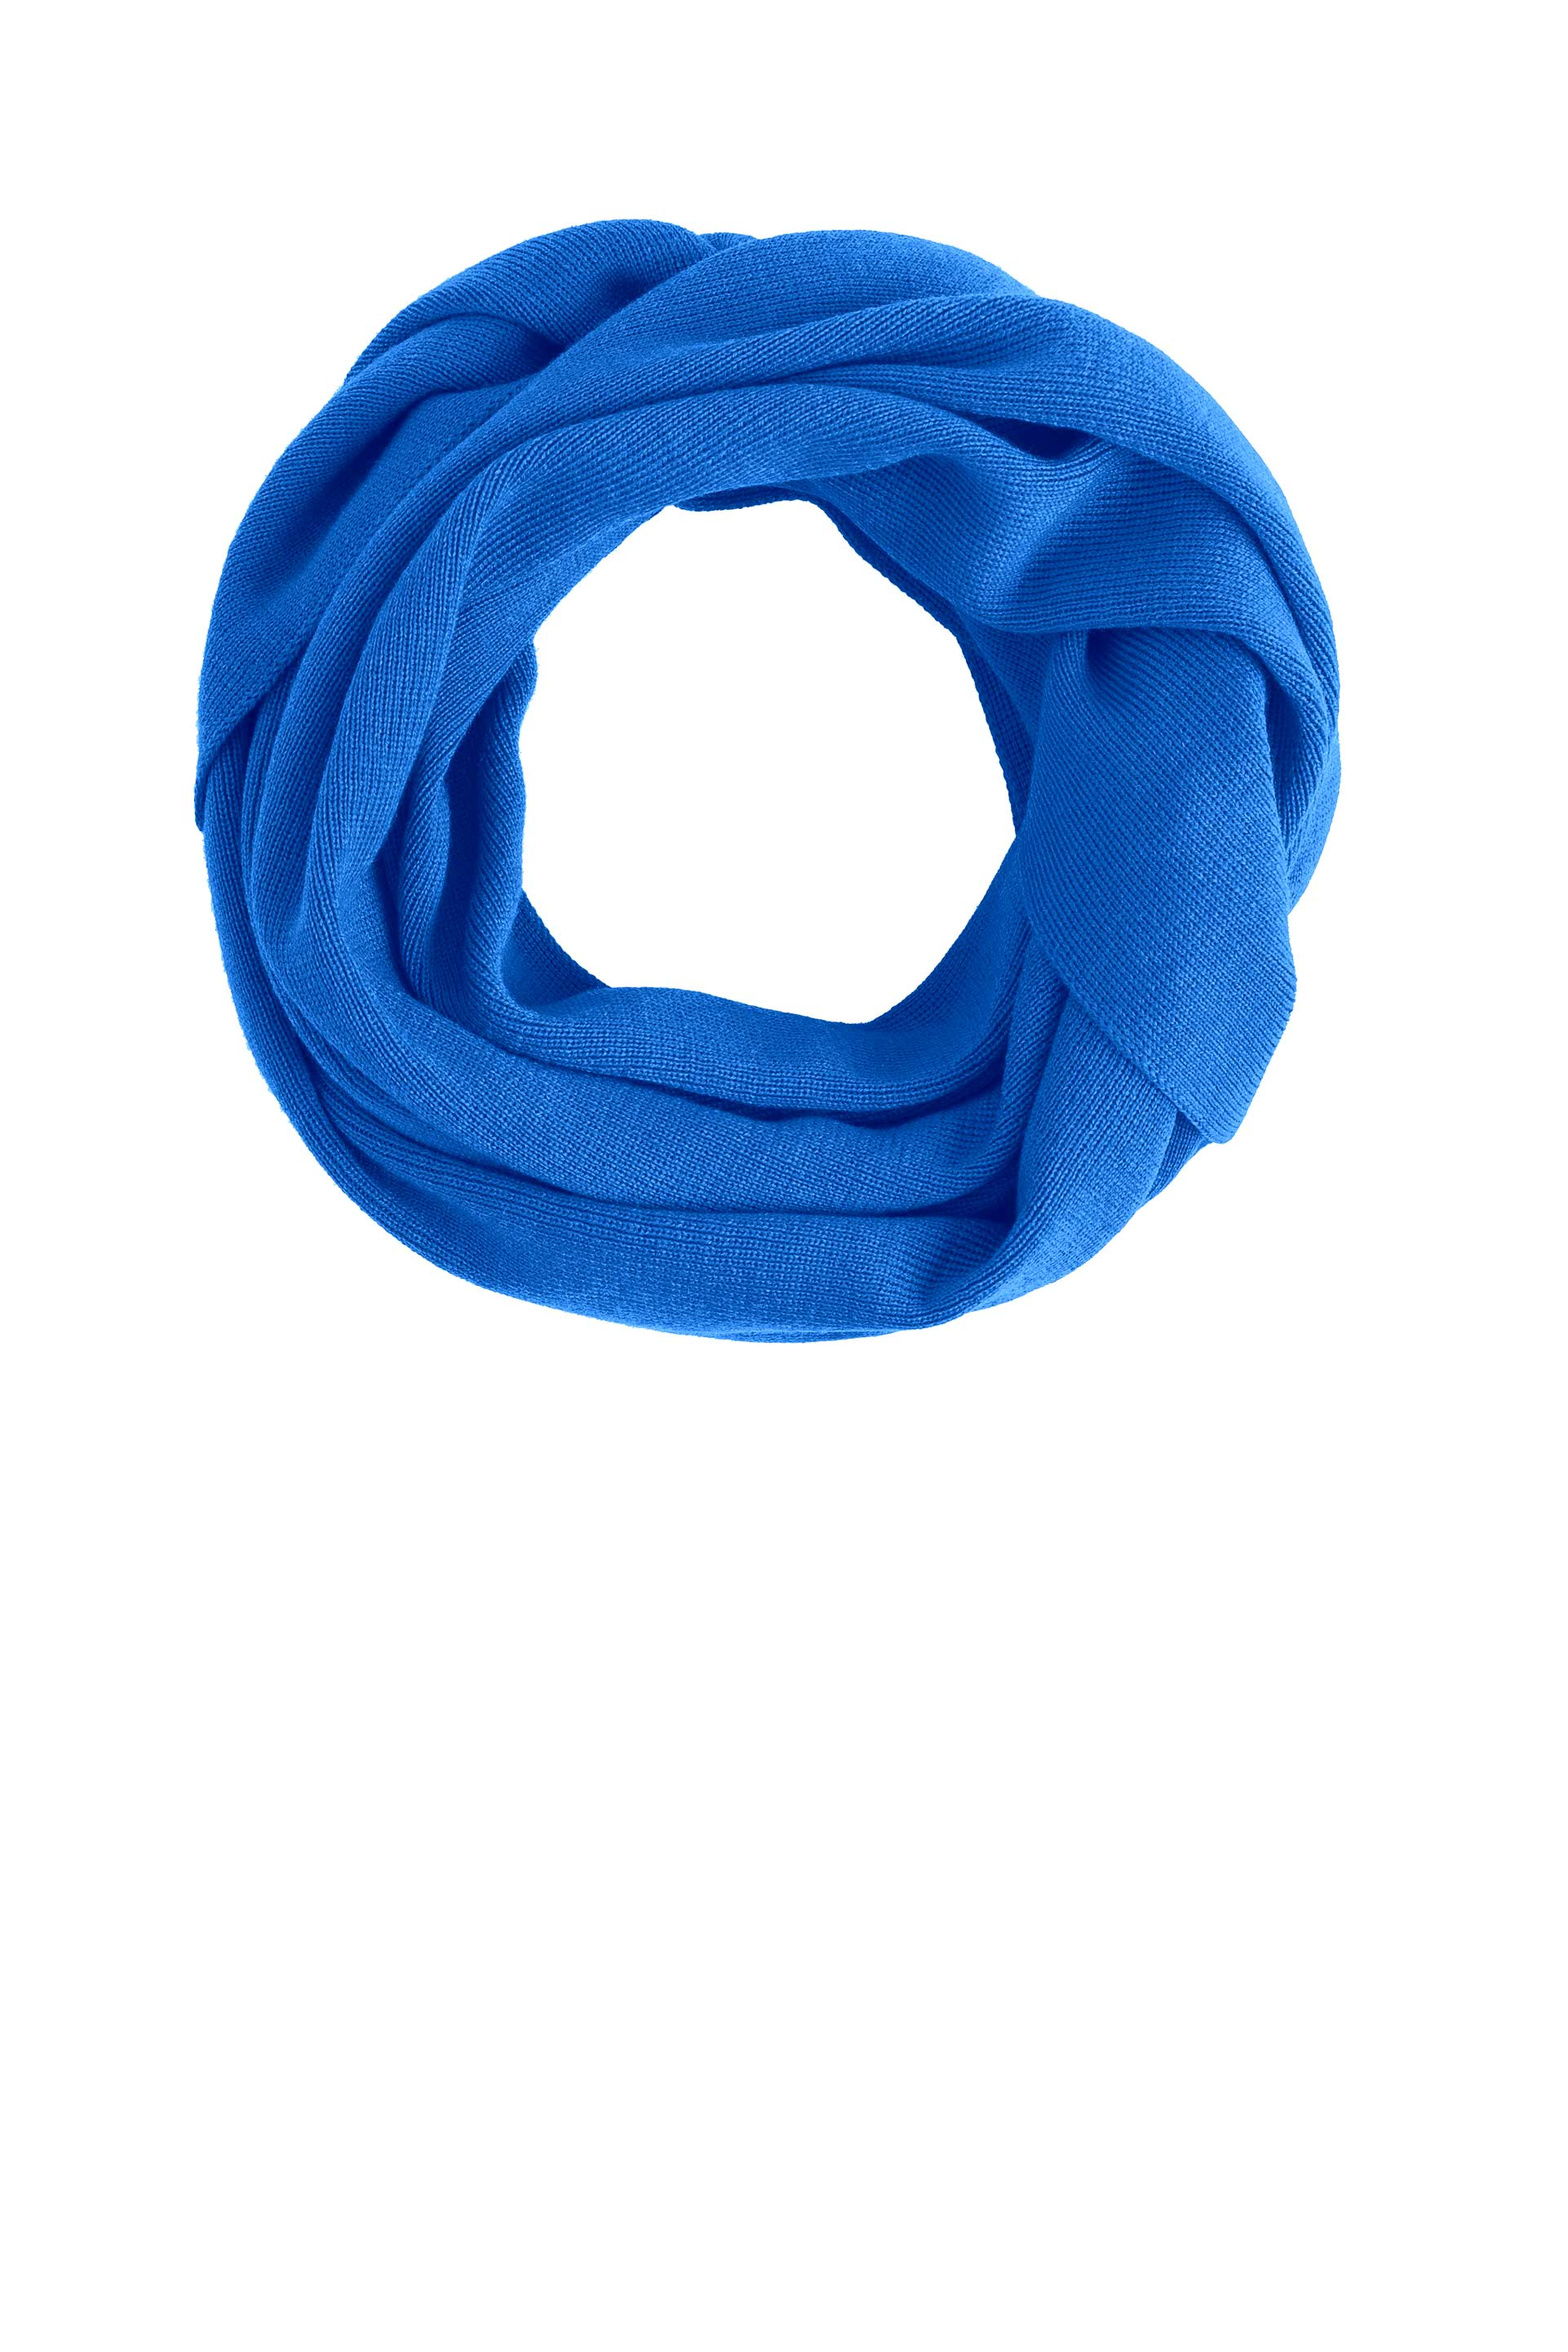 15258_merino_infinity_scarf_cobalt_blue.jpg